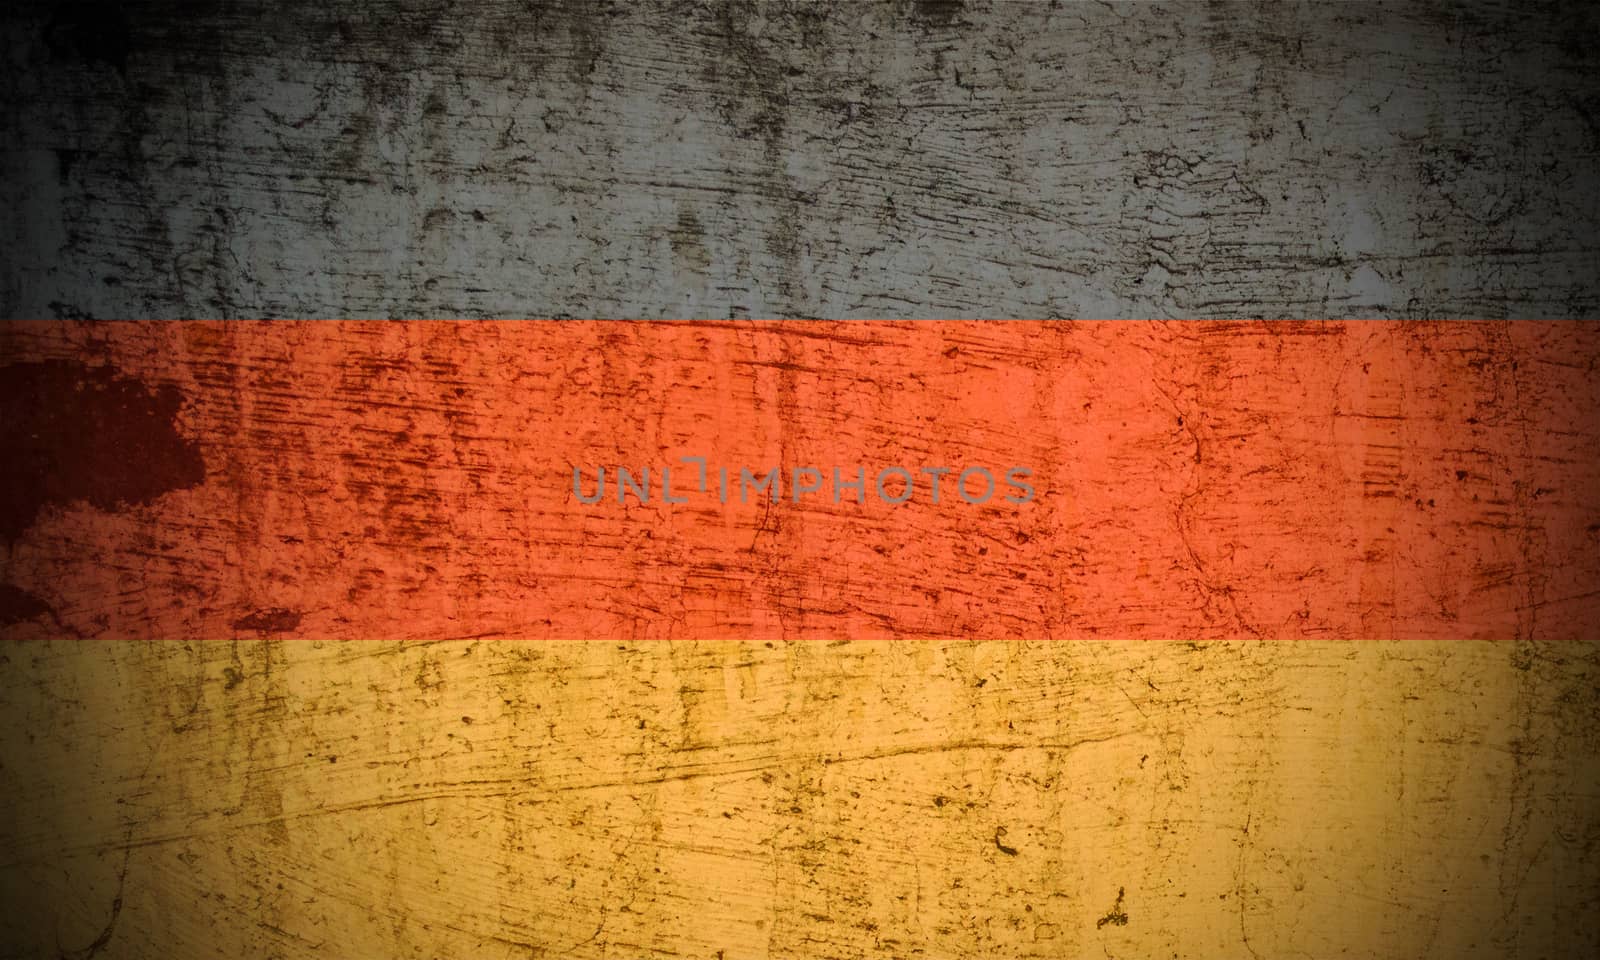 A Colourful Grunge German National Flag Illustration